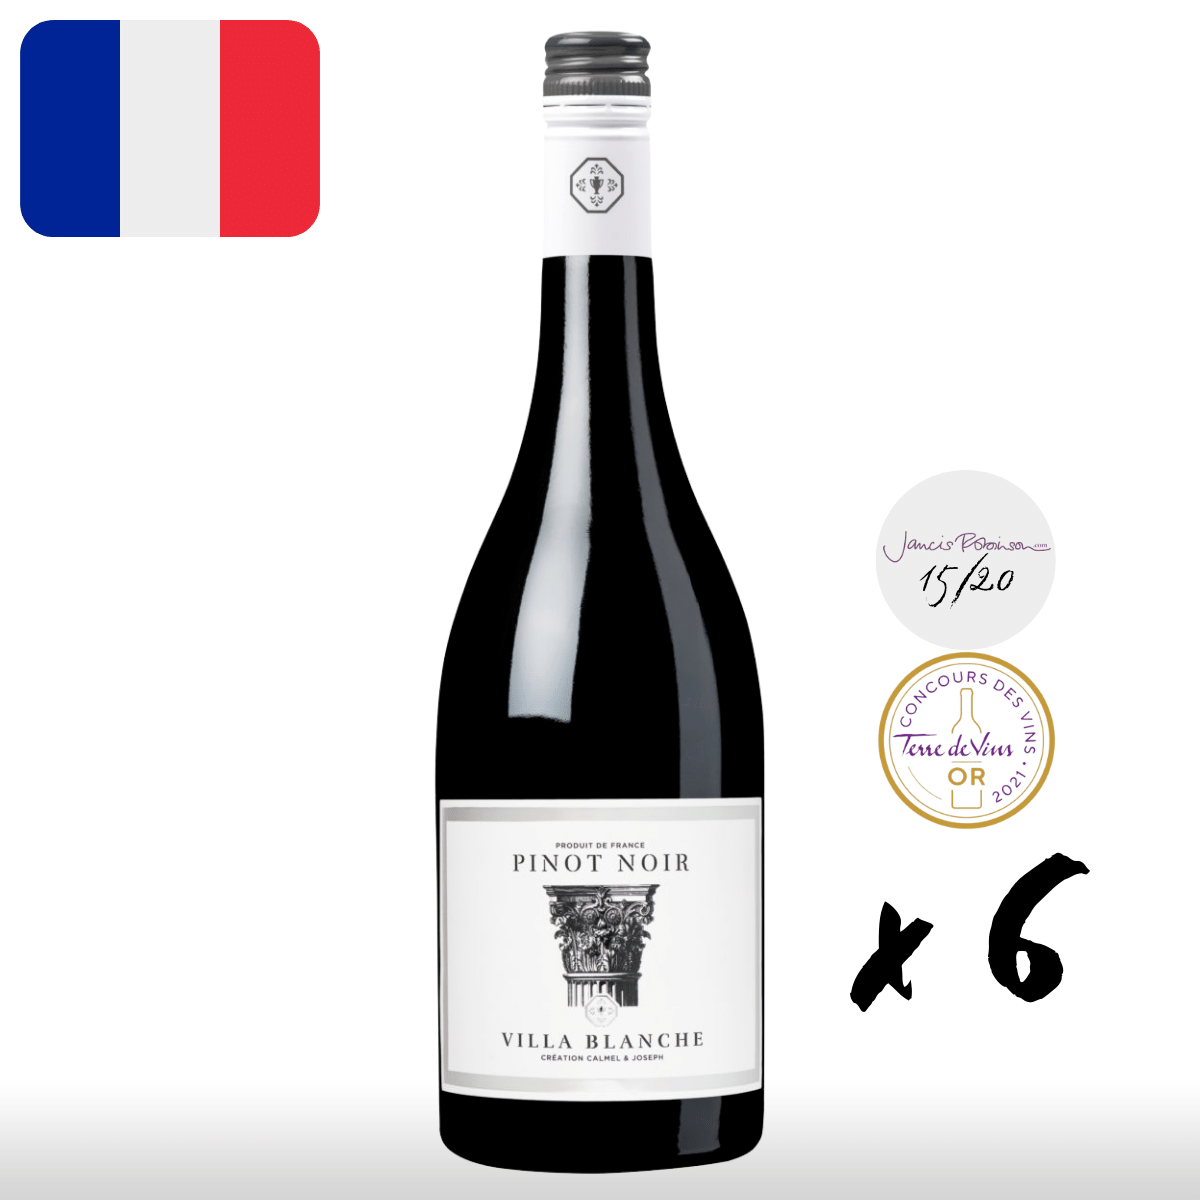 Calmel Joseph Villa Blanche Pinot Noir wine bottle0